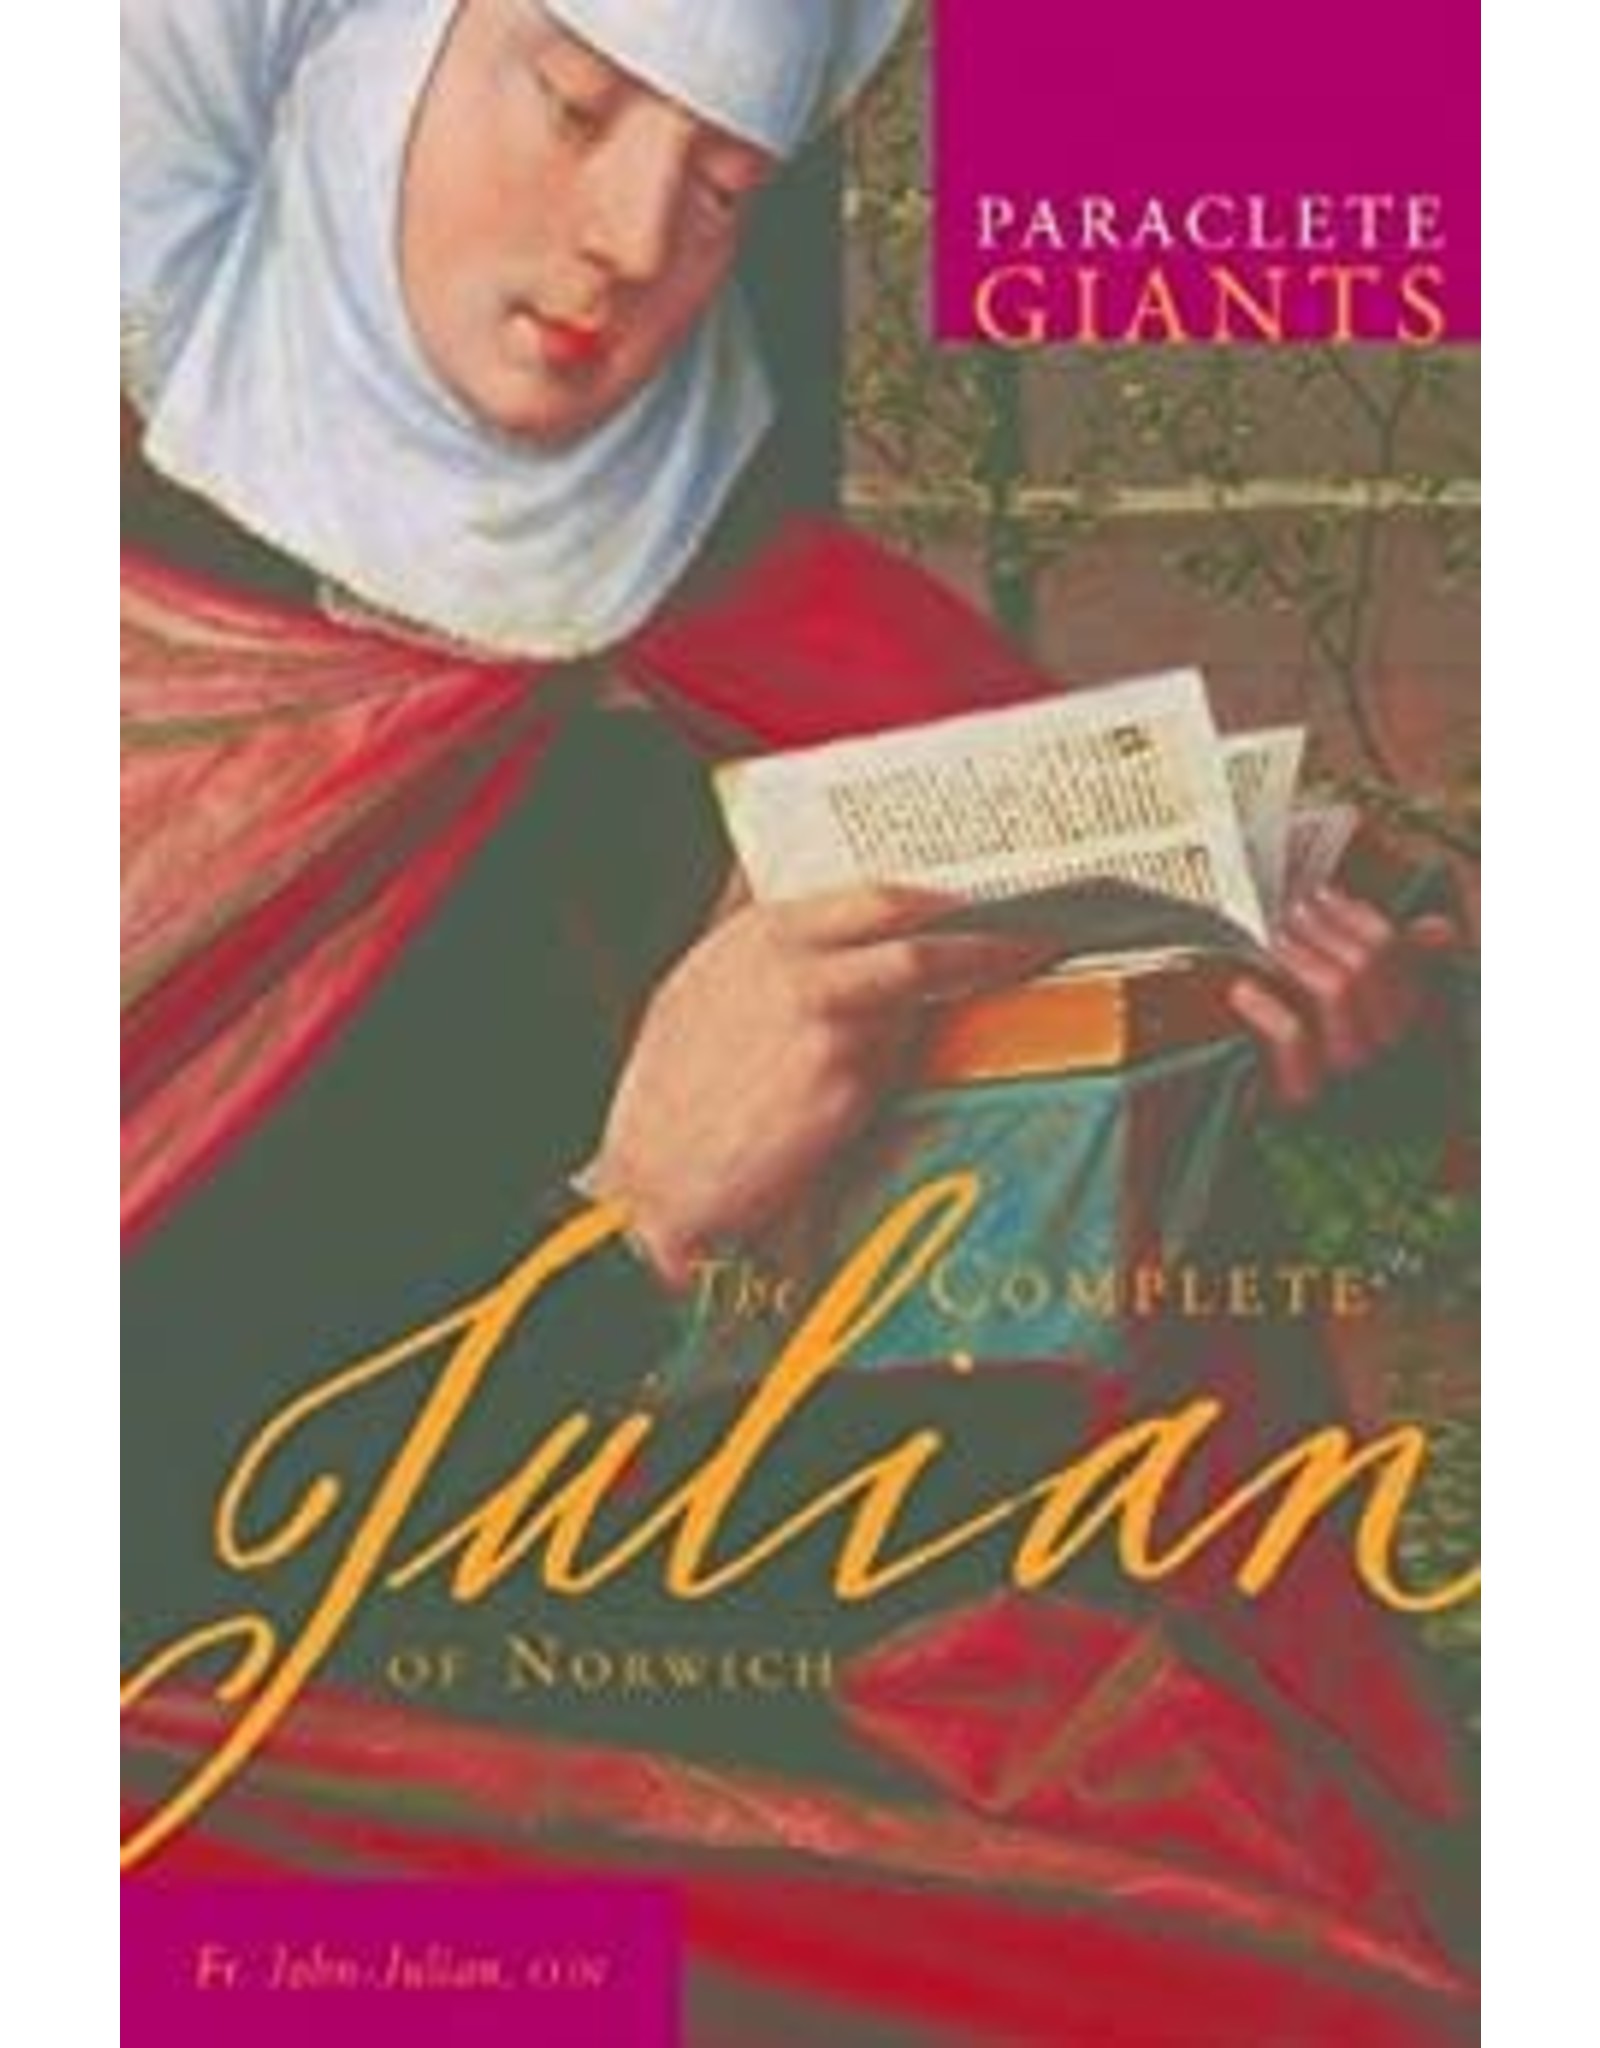 Paraclete Press The Complete Julian of Norwich Translated by Fr. John-Julian, OJN (Paraclete Giants Paperback Edition)